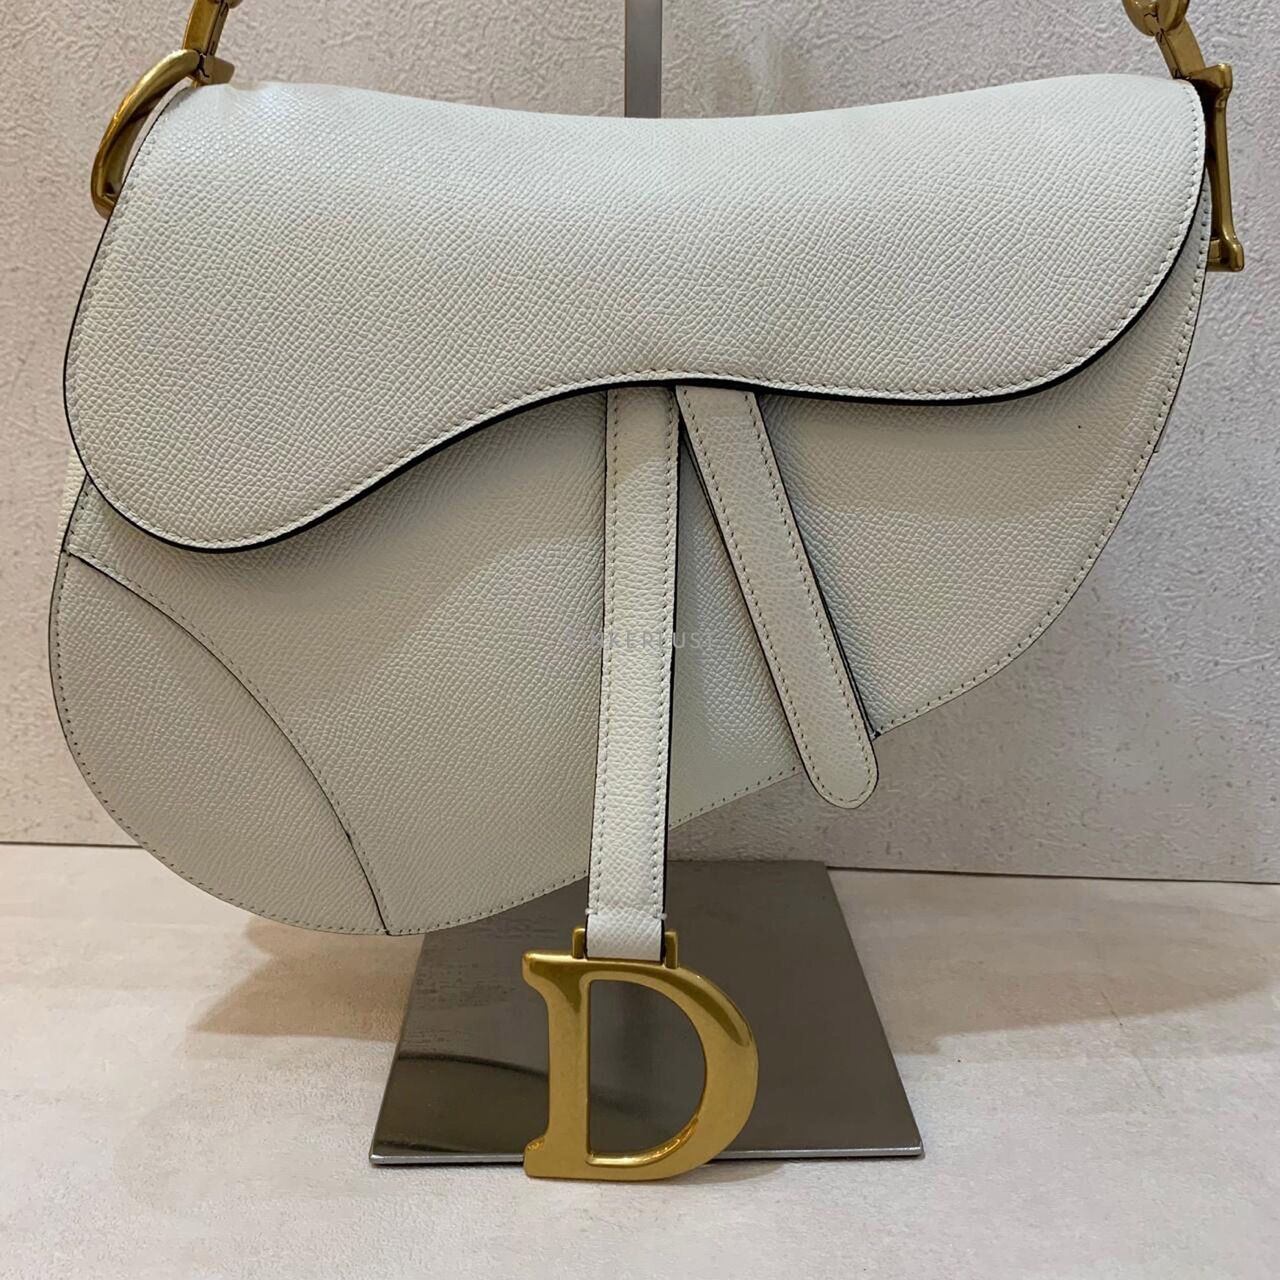 Christian Dior Saddle Medium in White Grained GHW 2022 Shoulder Bag